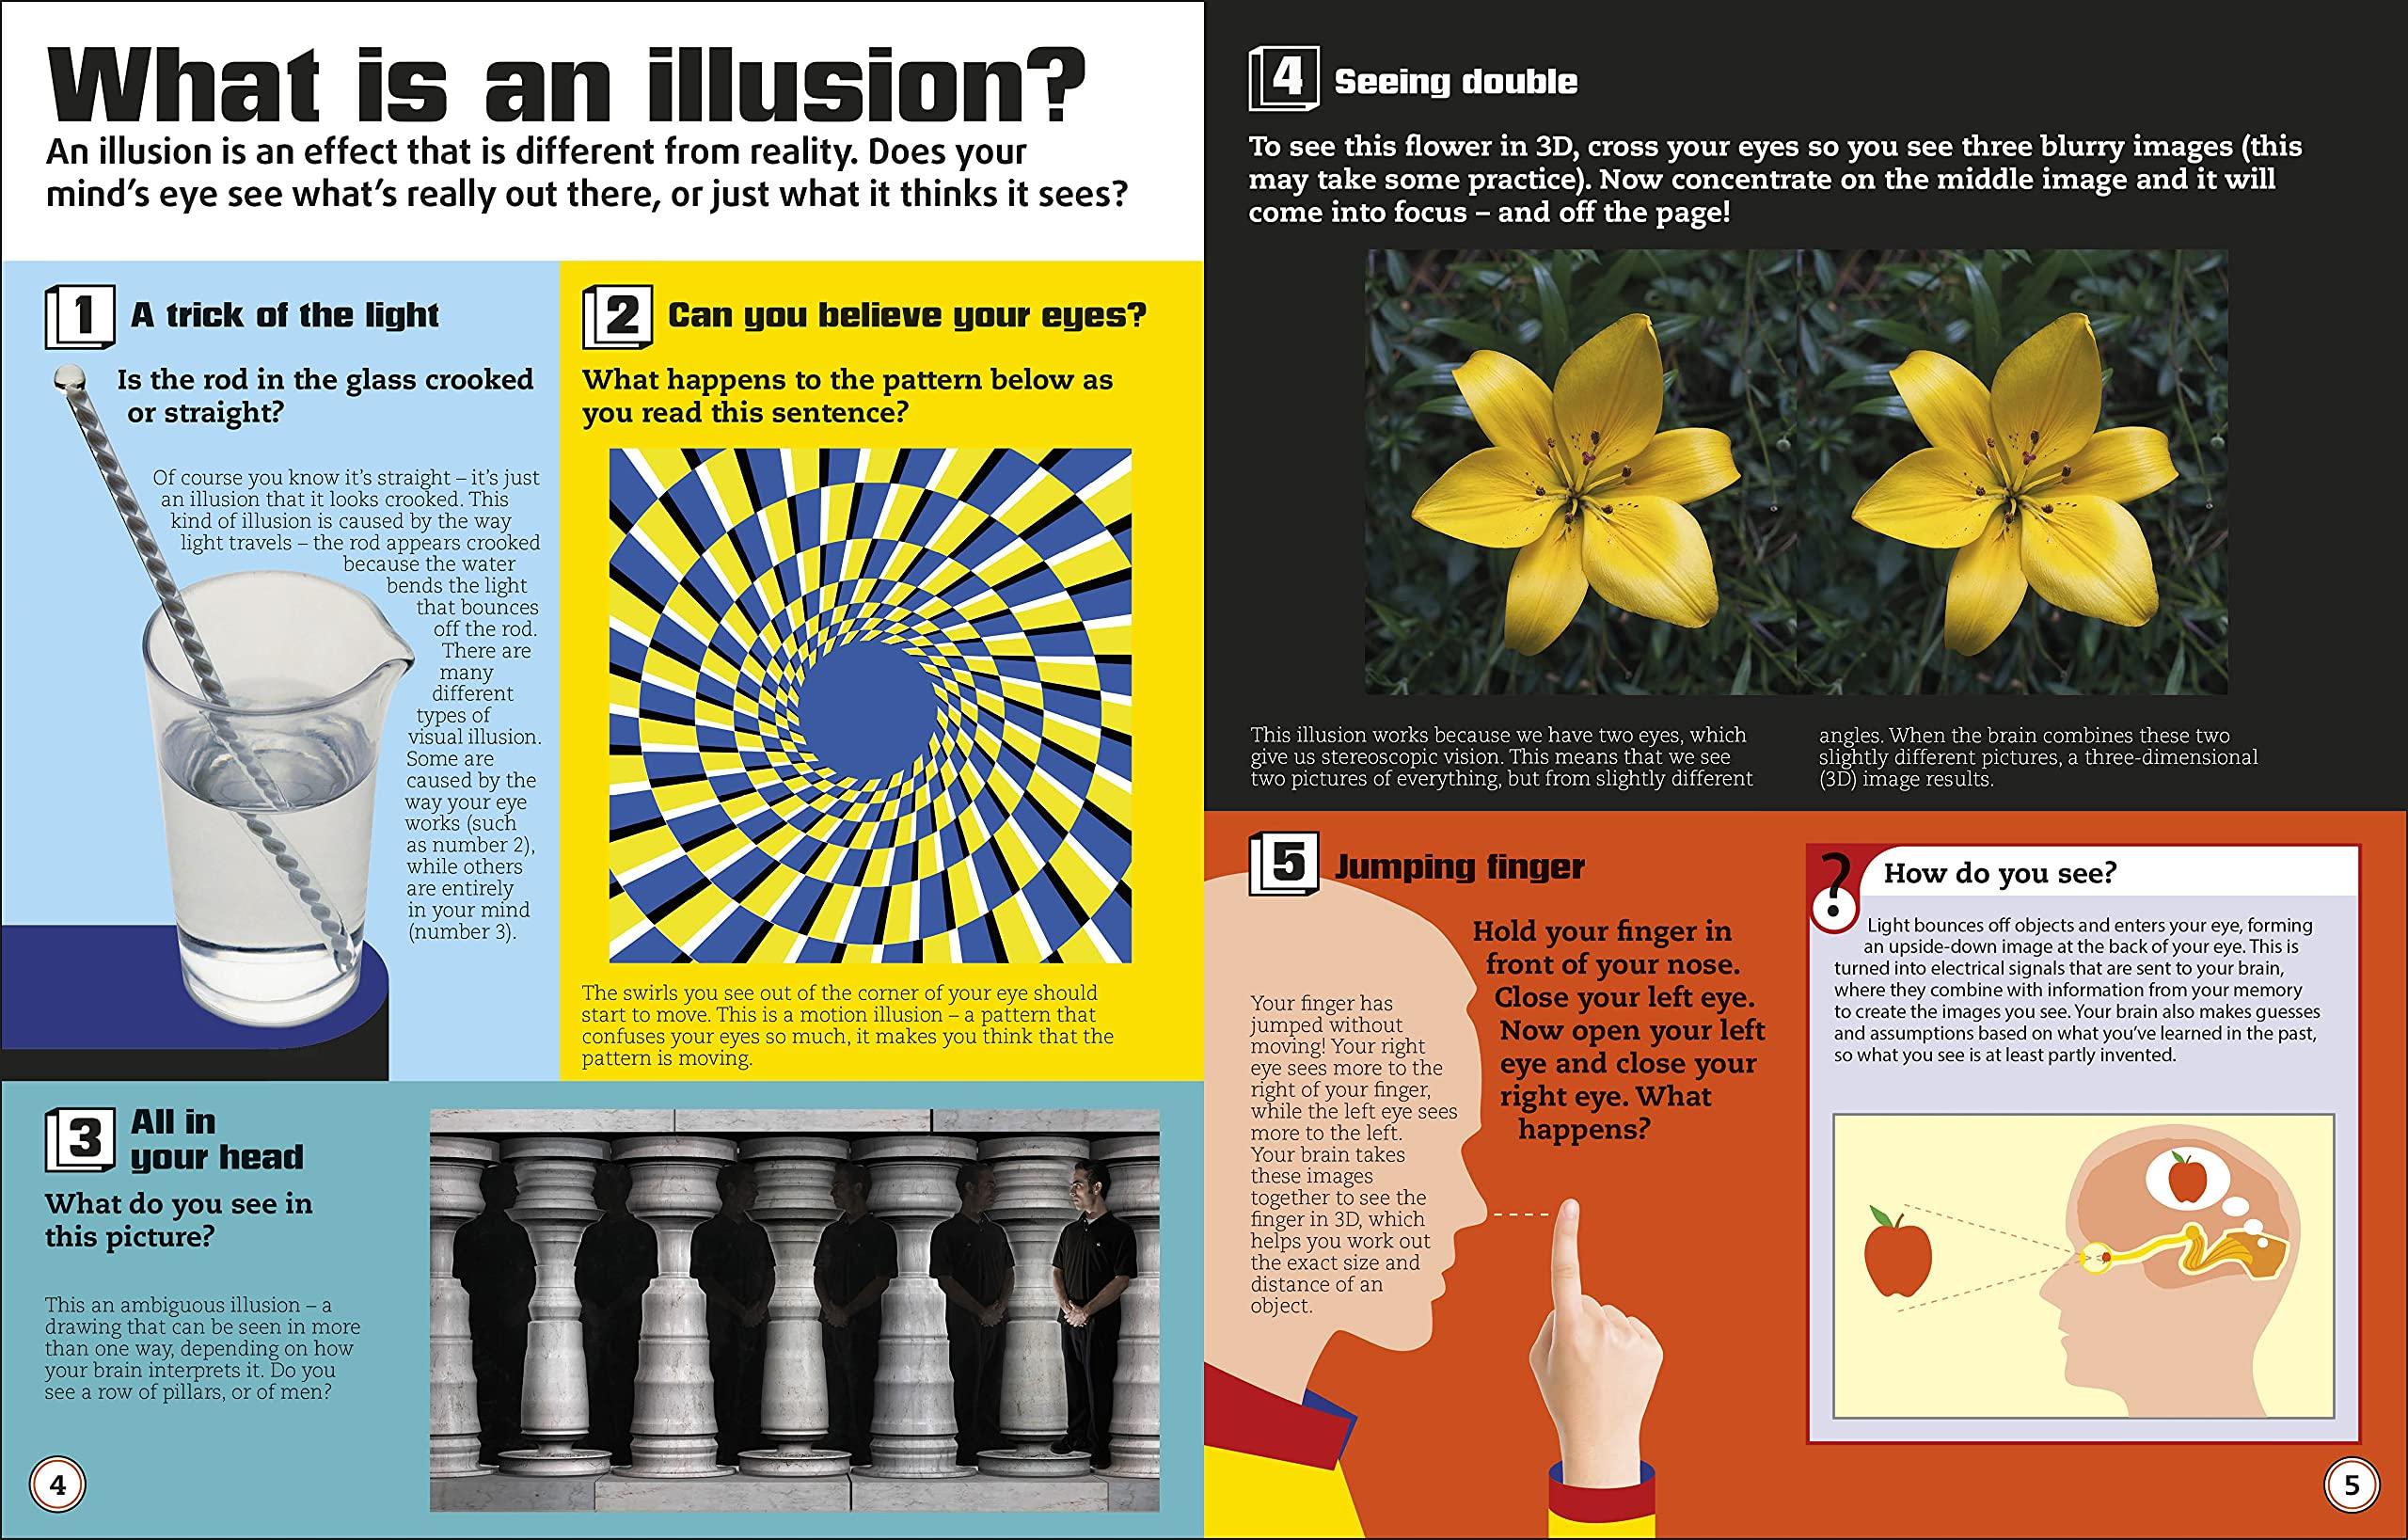 Optical Illusions: Incredible Pop-Up Visual Magic!